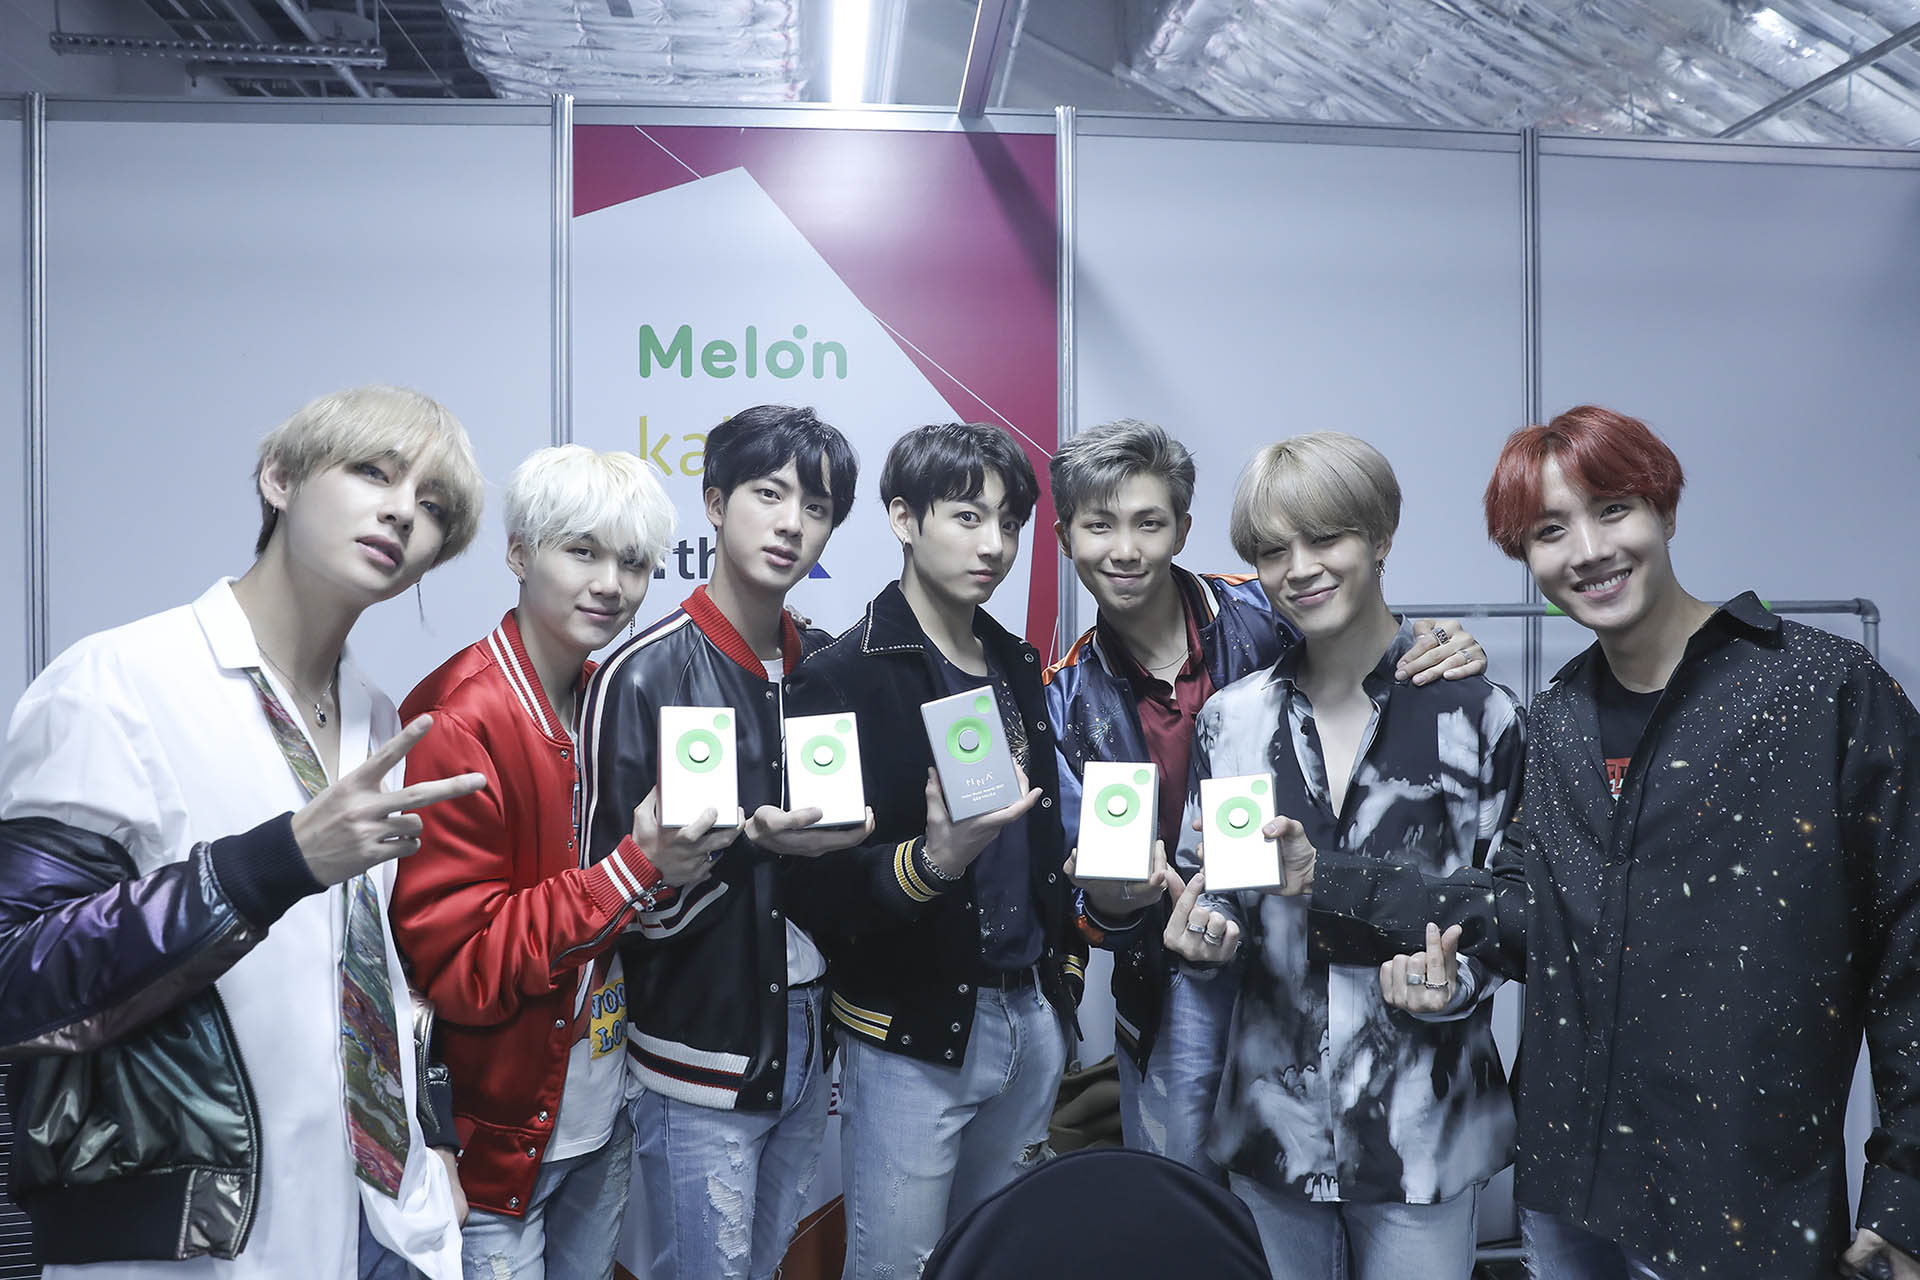 2019 Melon Music Awards will be held on Nov. 30 at Gocheok Sky Dome